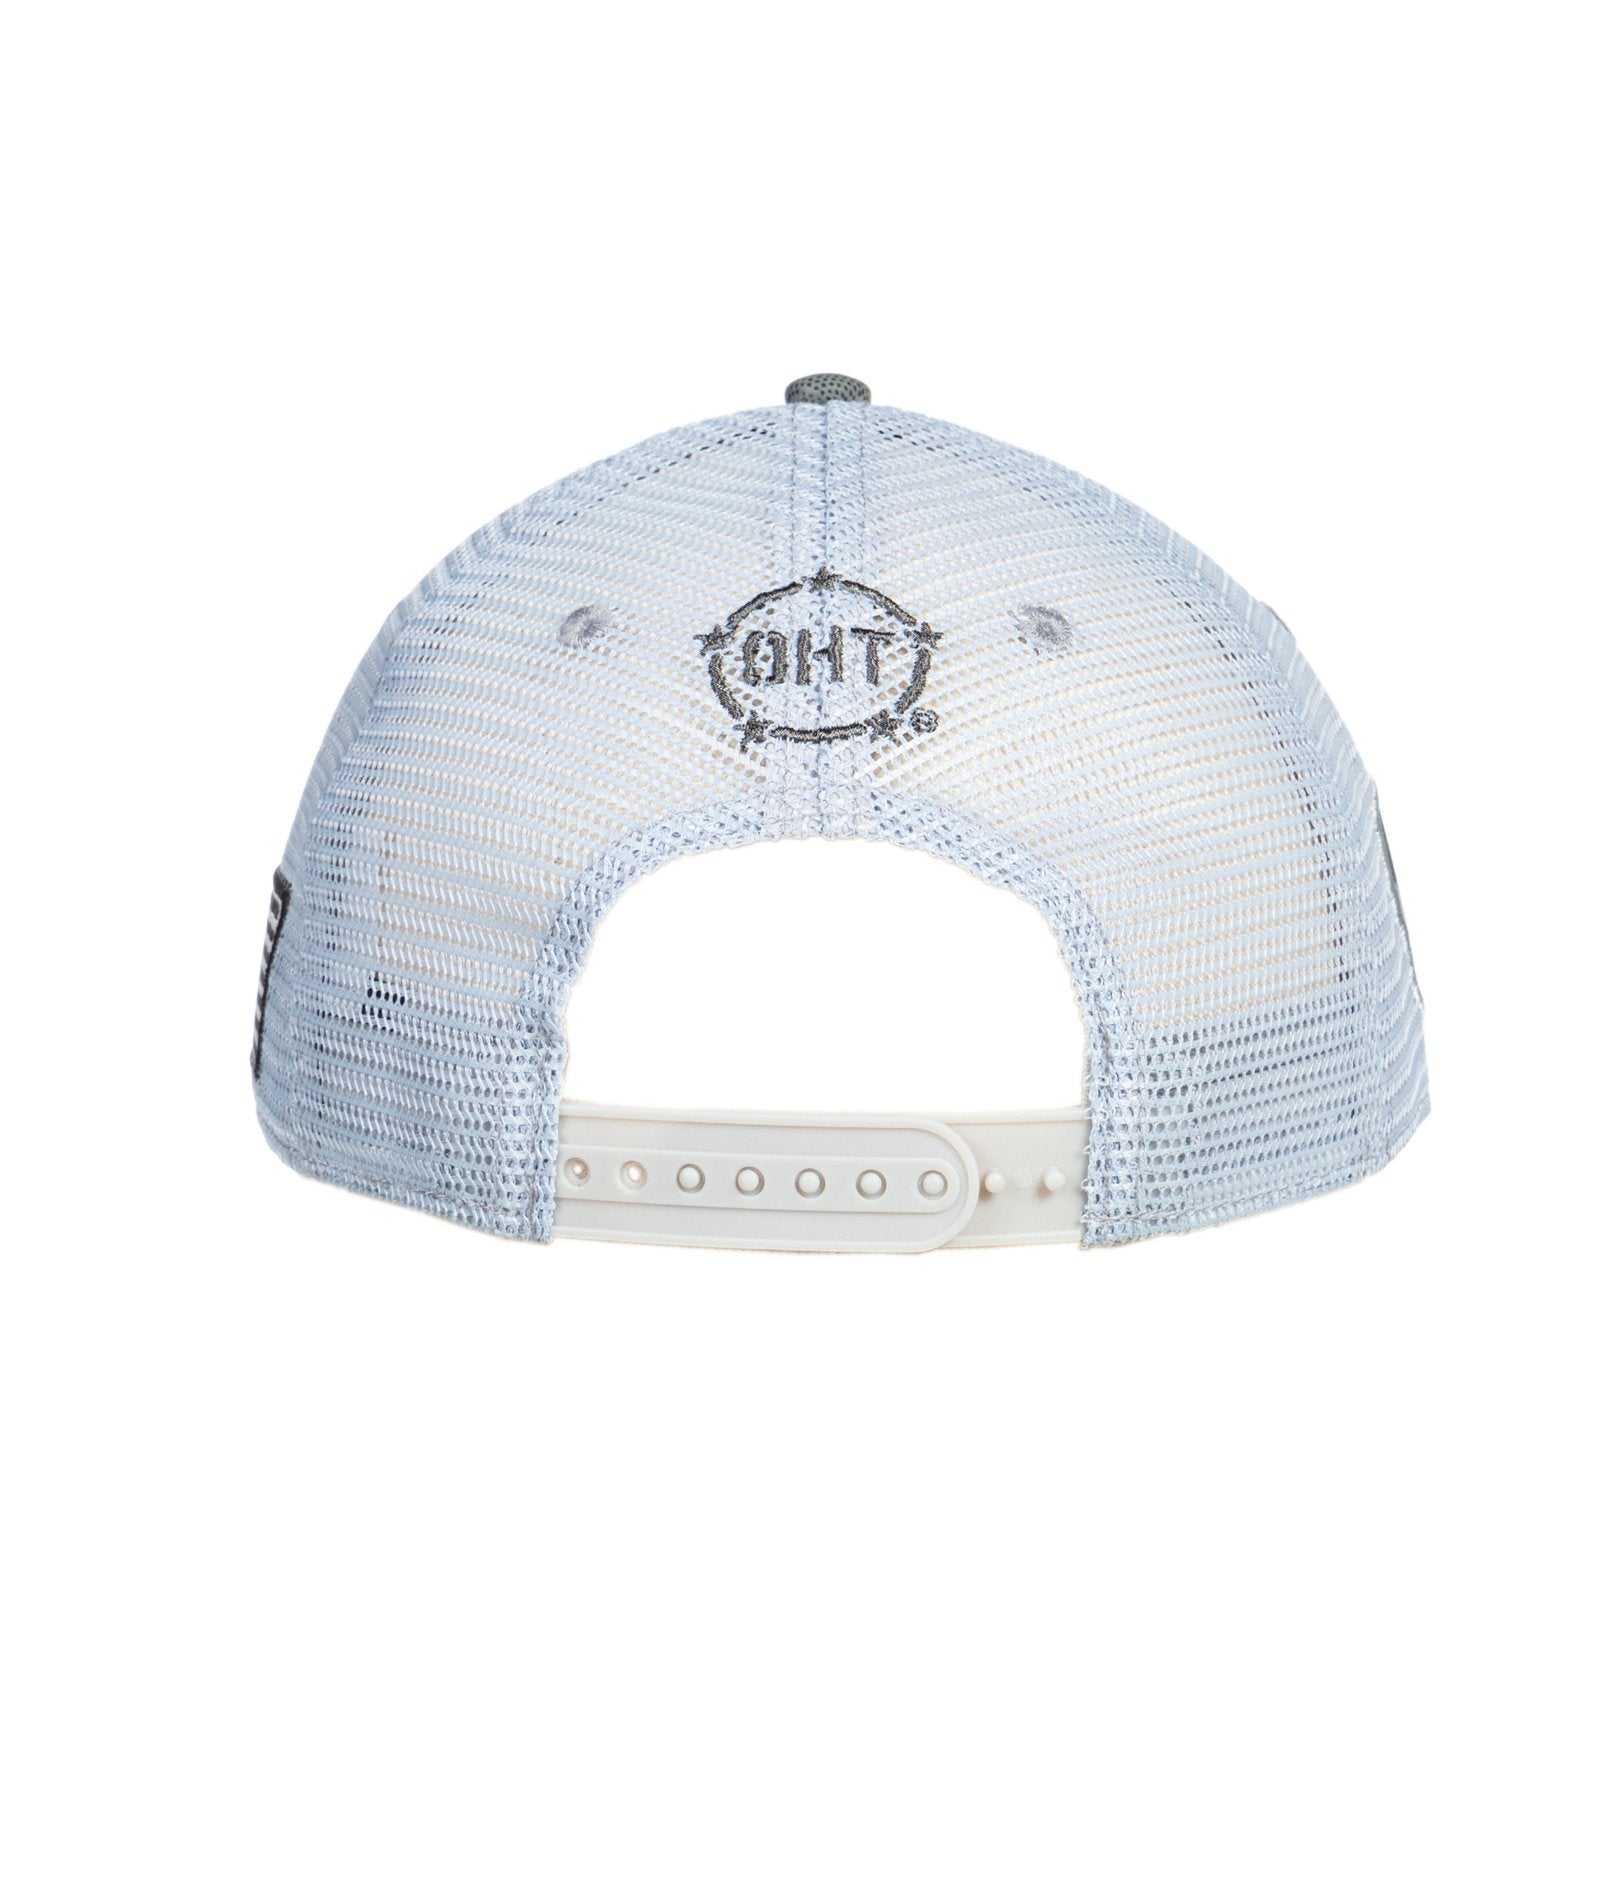 Operation Hat Trick Ice Reflective Adjustable Hat